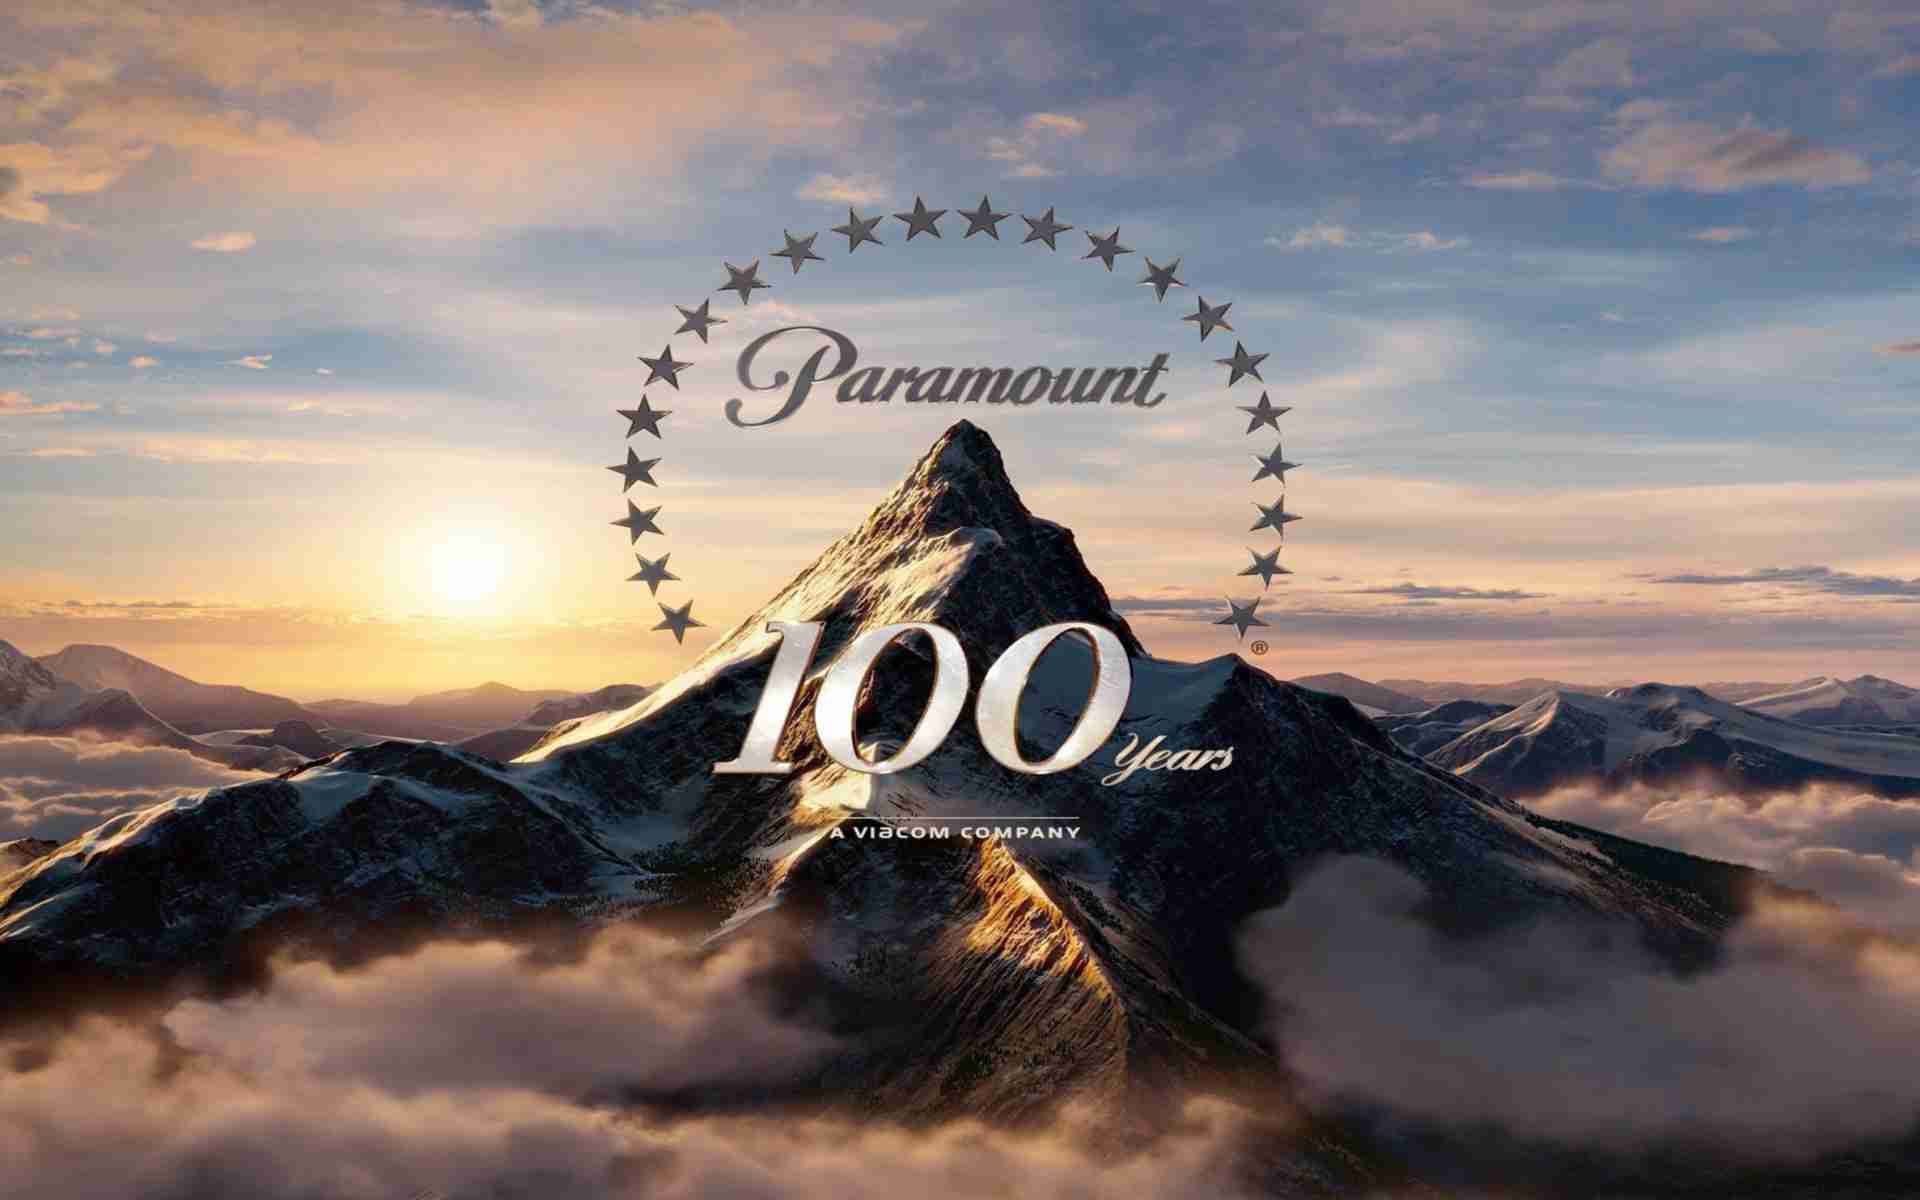 HD wallpaper, Of, Paramount, Years, 100